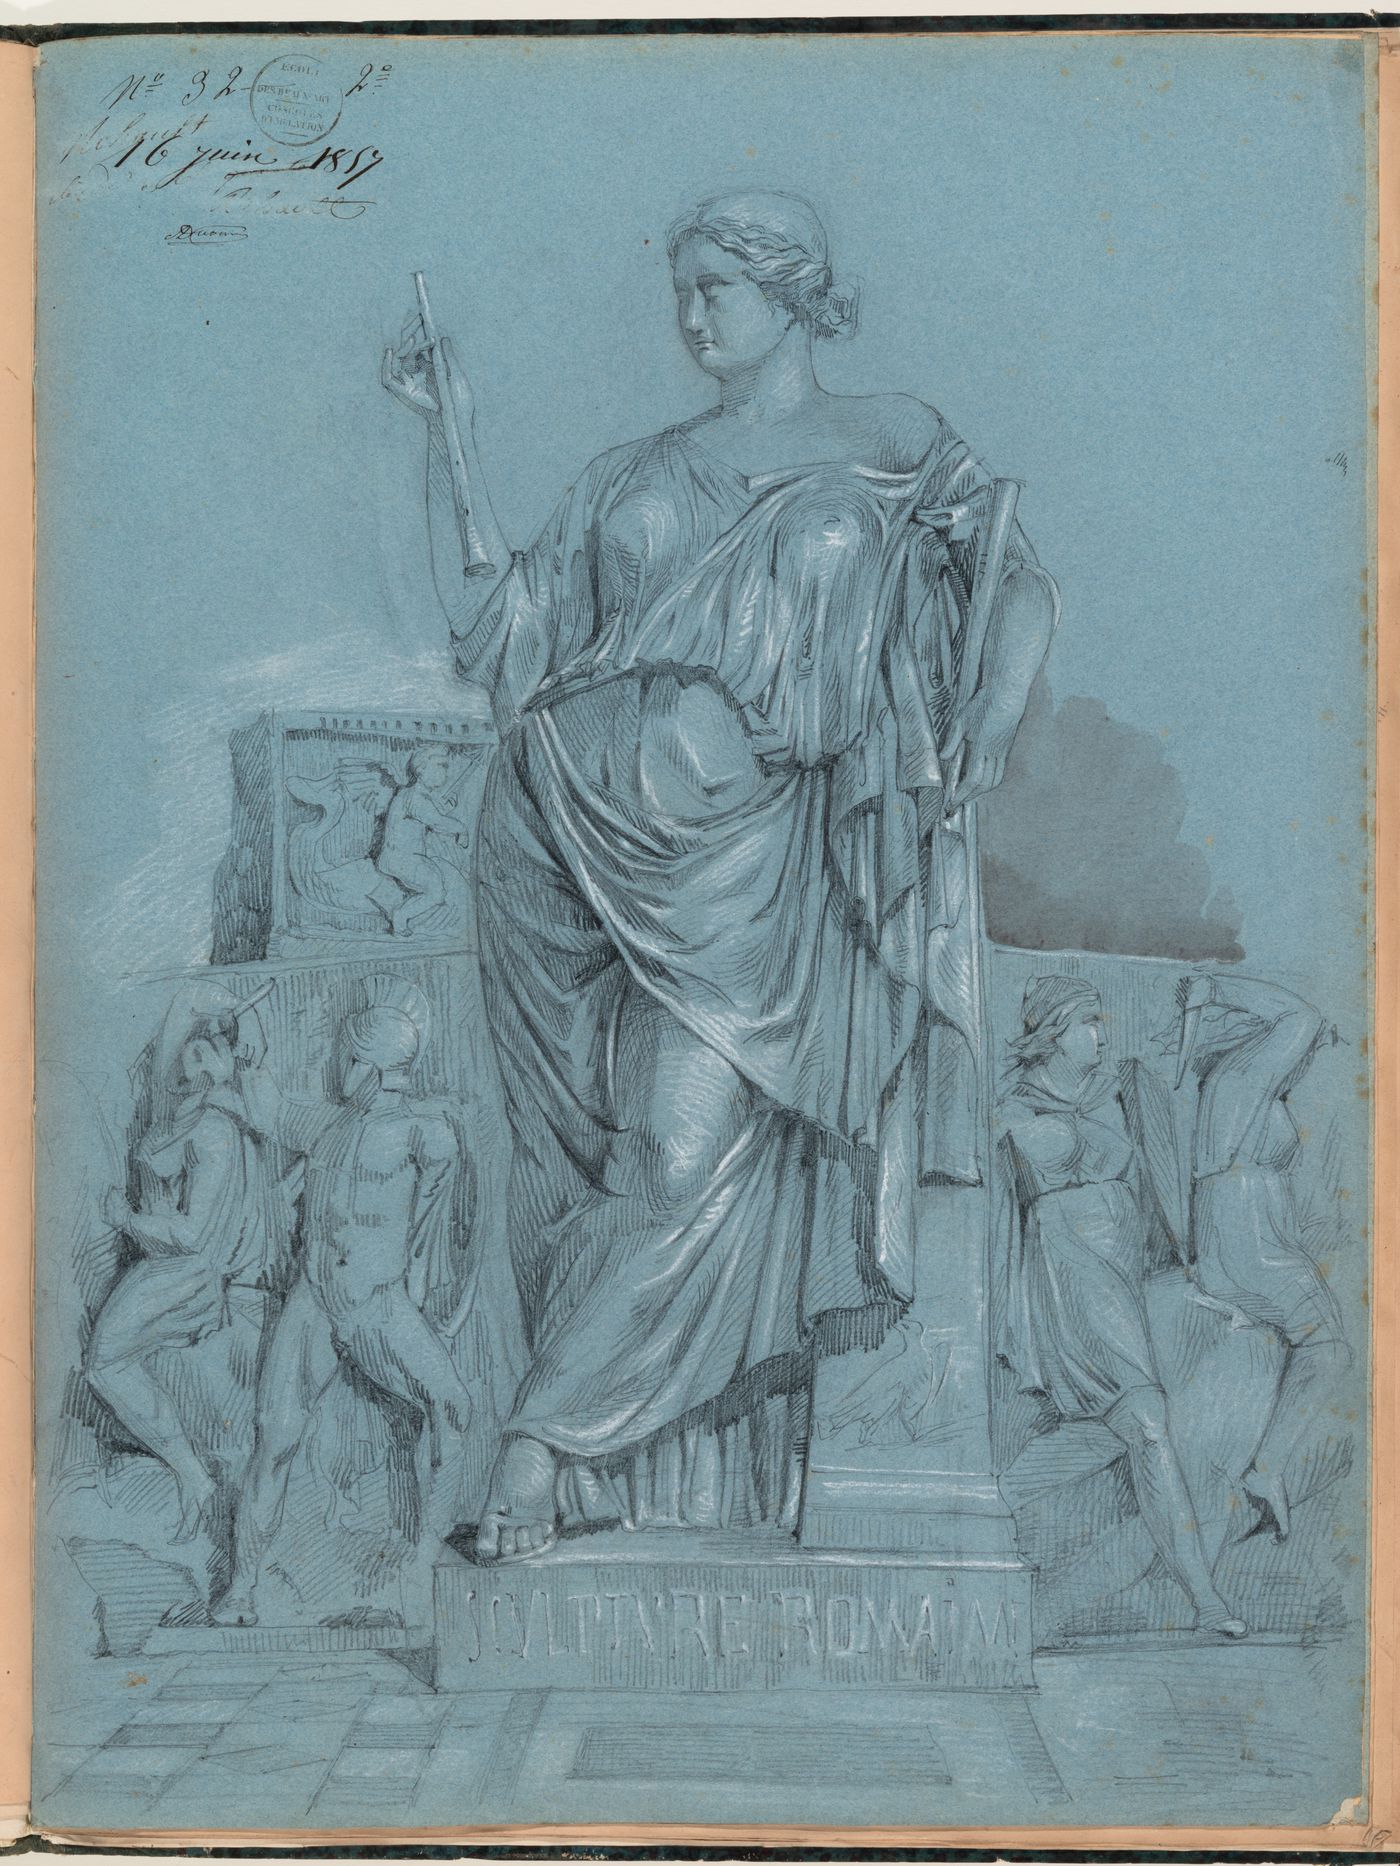 Concours d'émulation entry, 16 June 1857: Study of a female Roman statue with a sculpted frieze